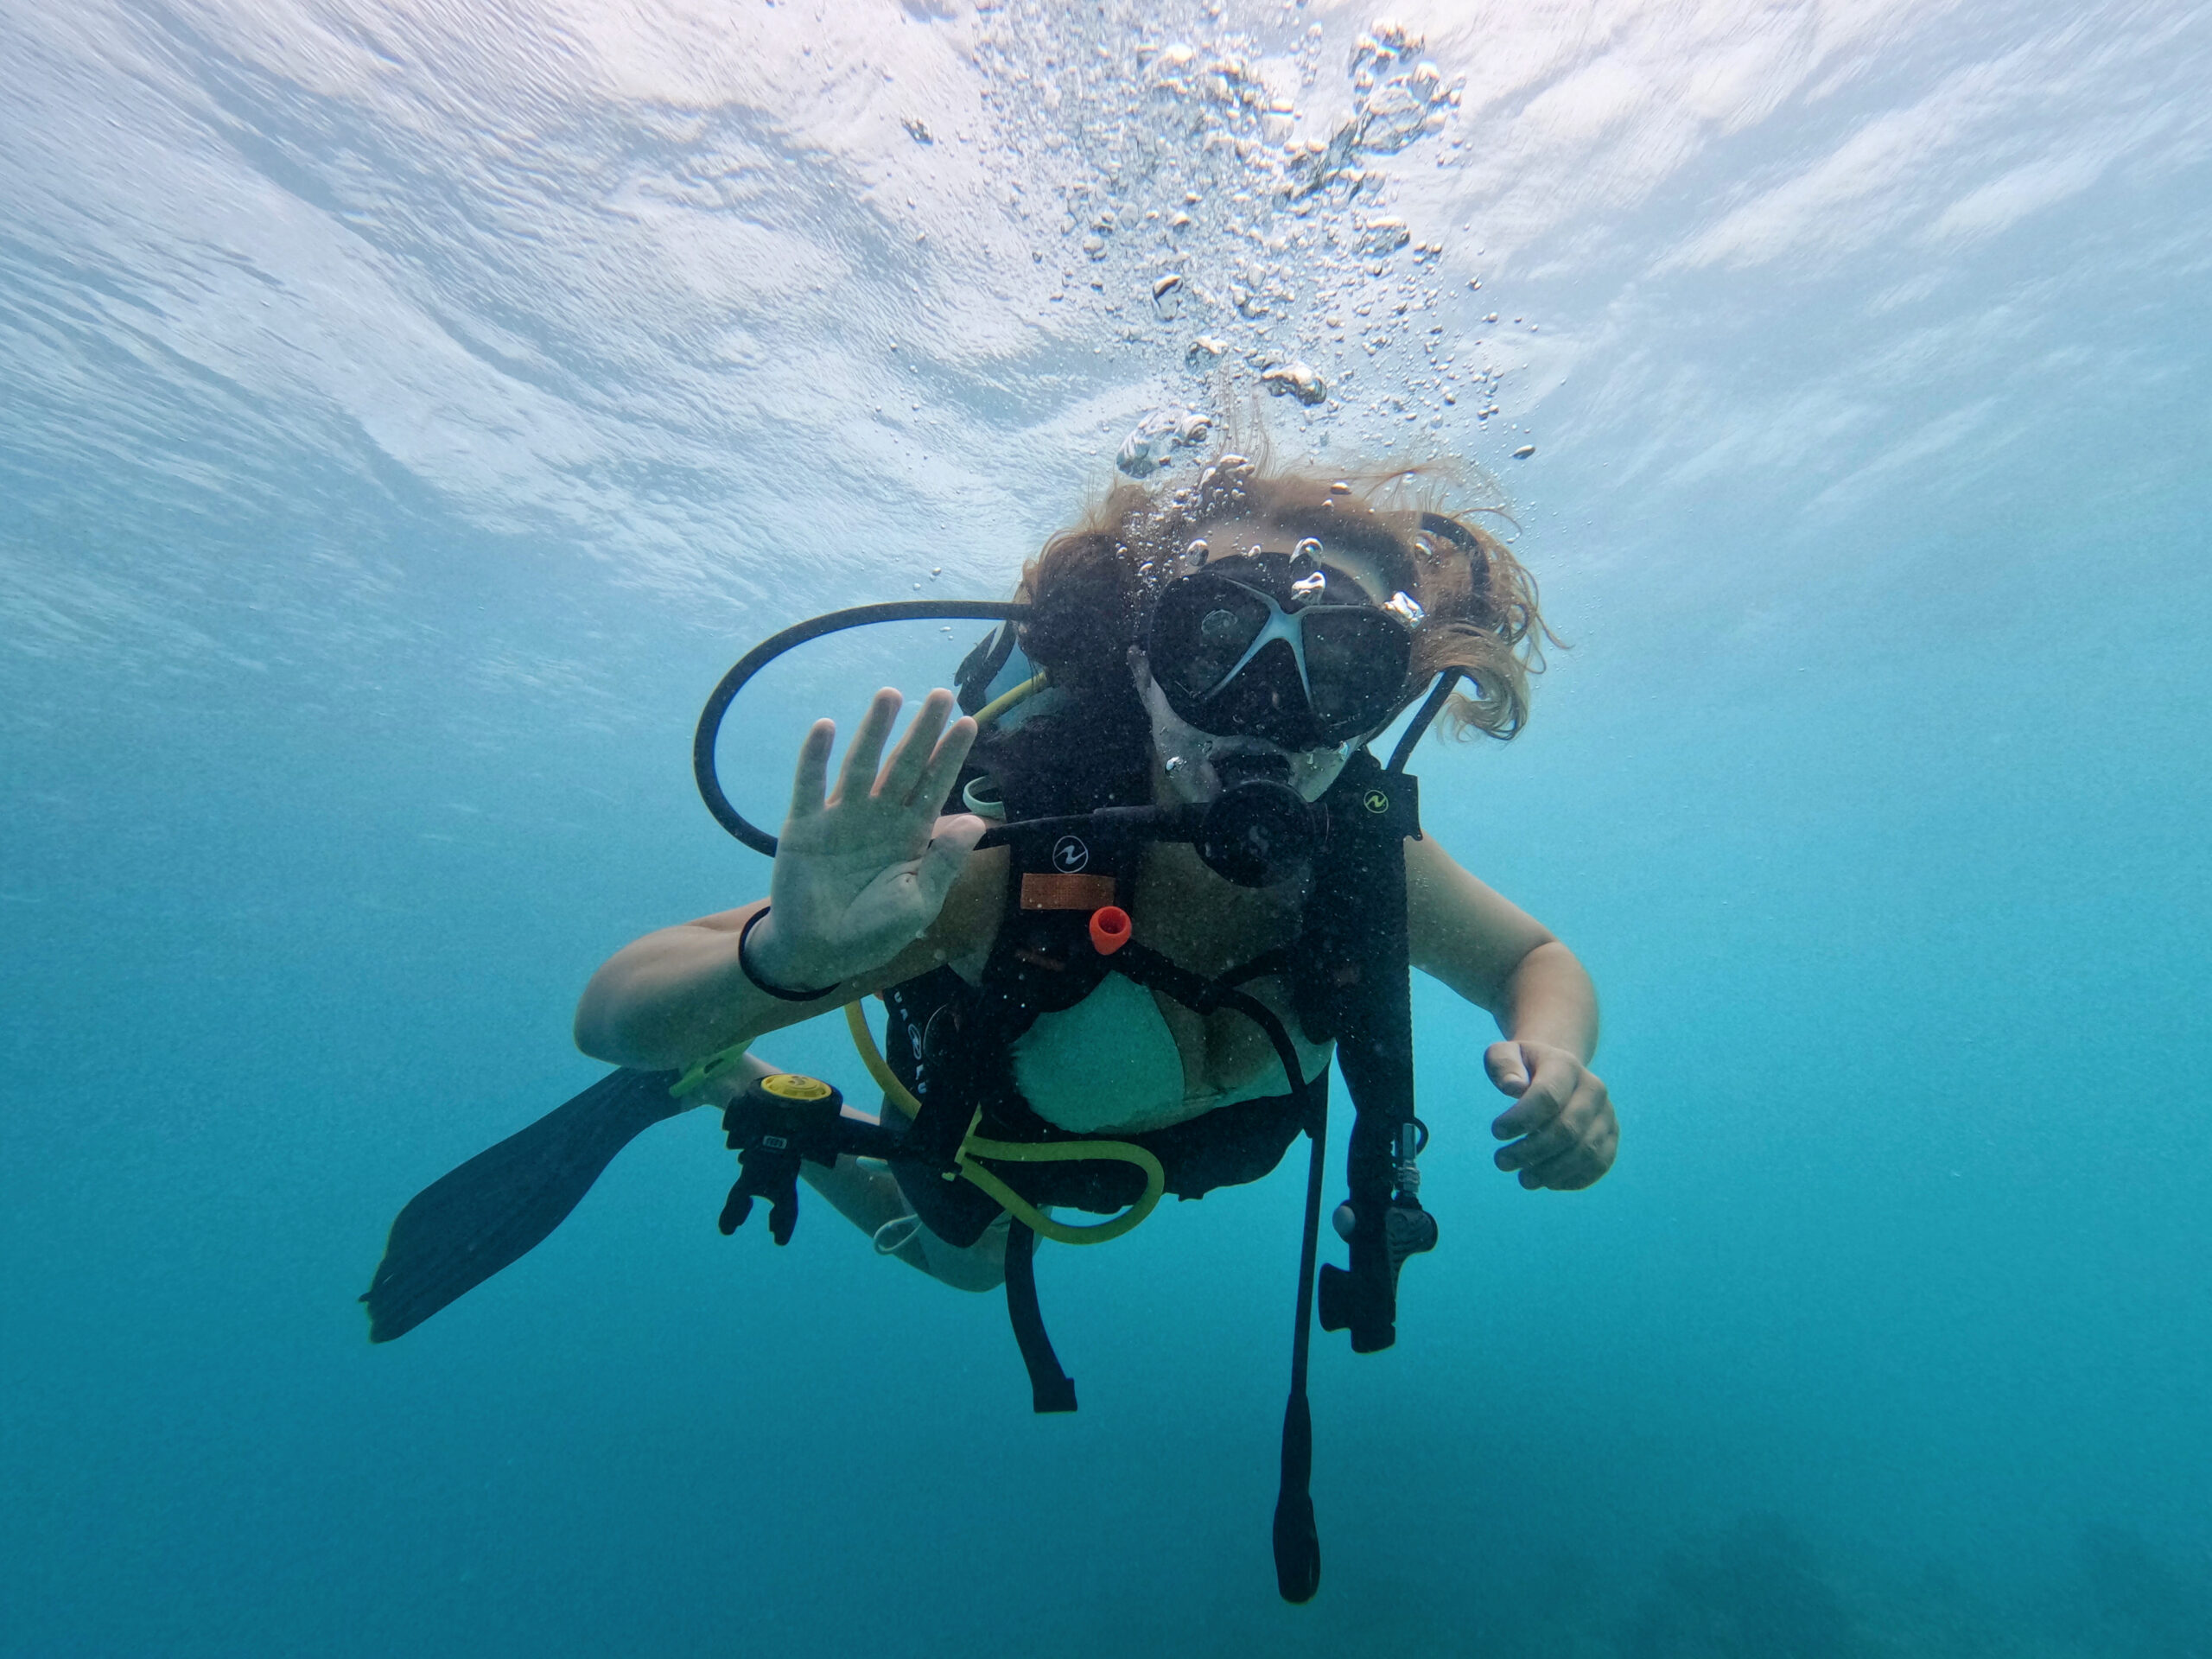 Scuba diving near a local island in Maldives